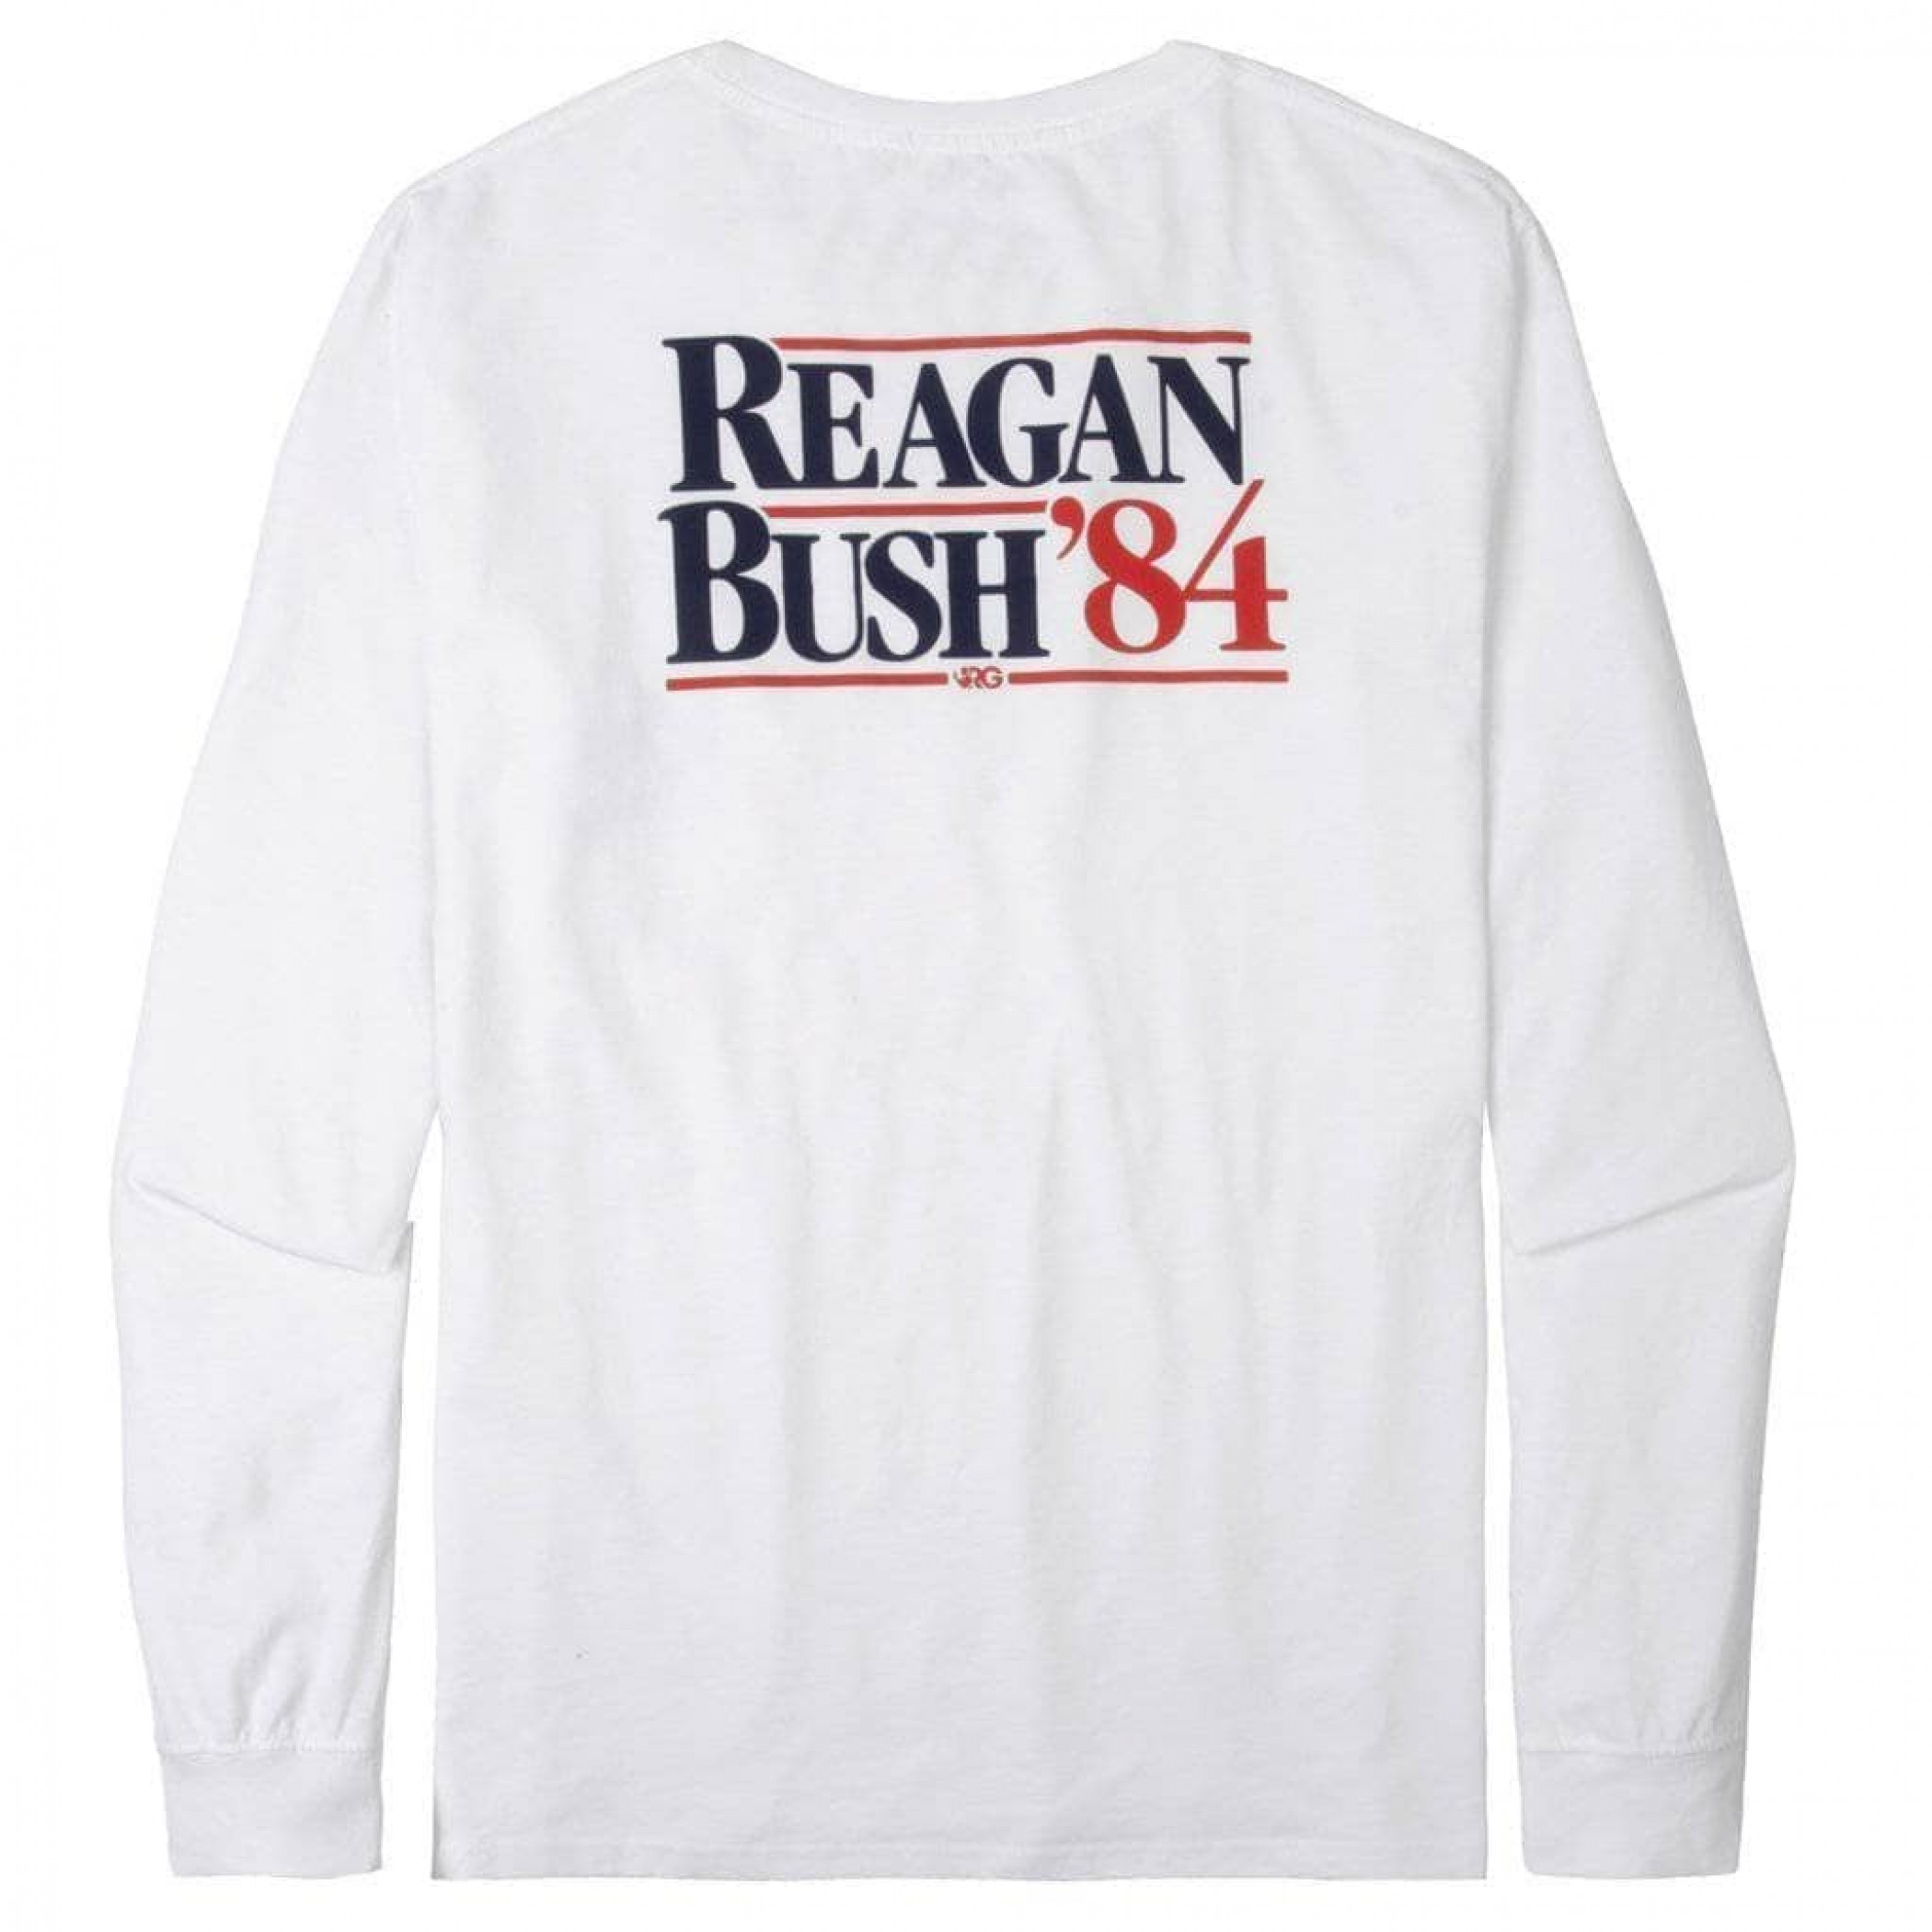 Reagan Bush '84 - RG Toasting Man Pocket